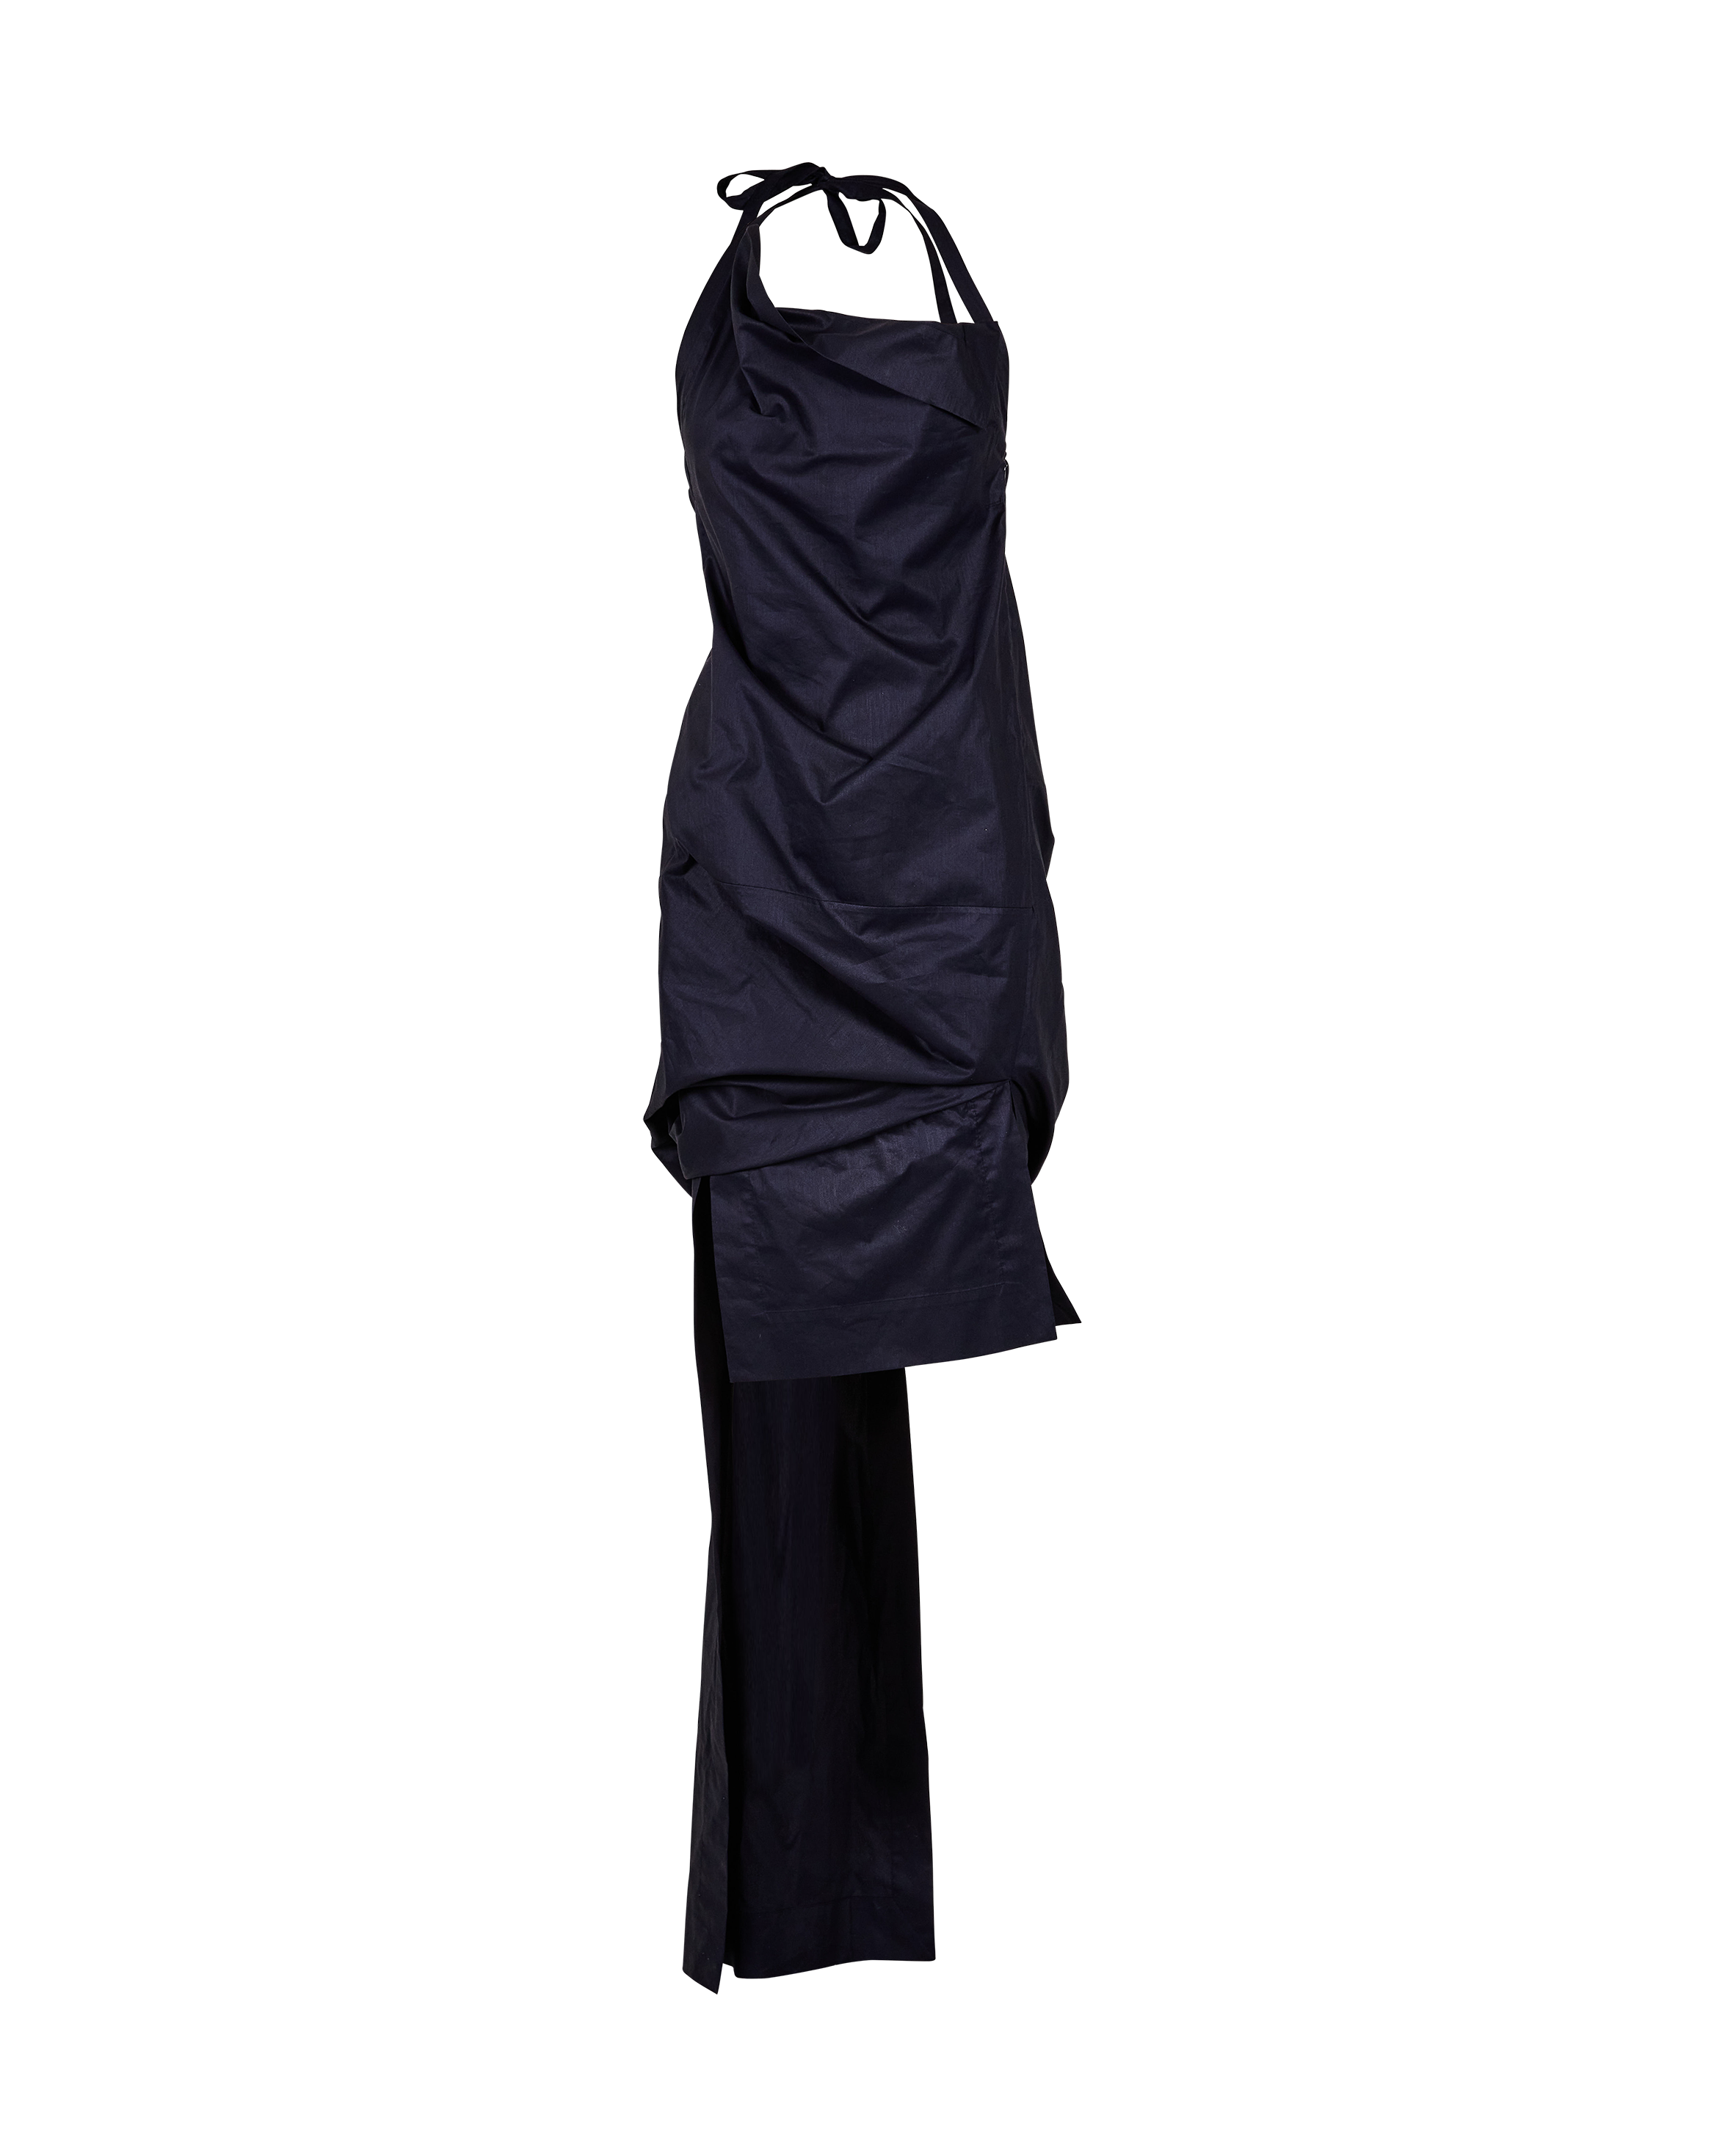 c. 2012 Sculptural Black Asymmetrical Dress